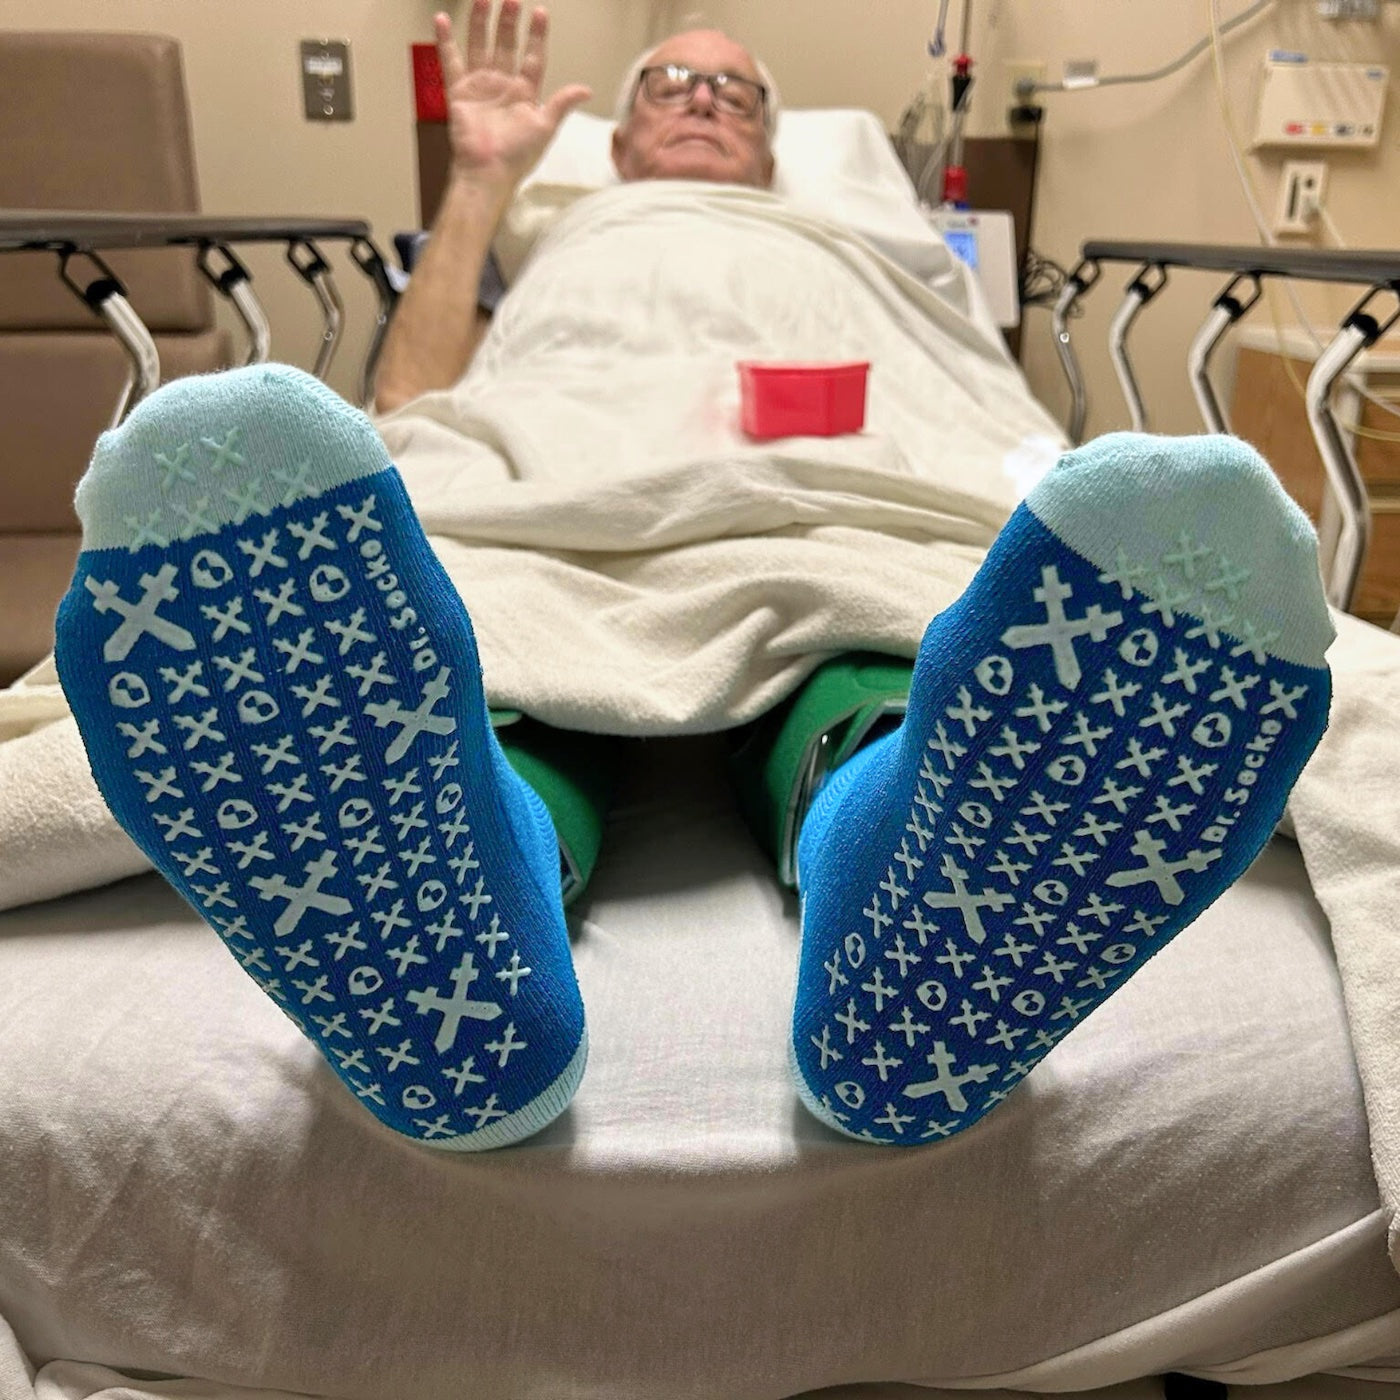 Psych Ward Socks: Why Patients Wear Them in Psychiatric Hospitals – Dr.  Socko